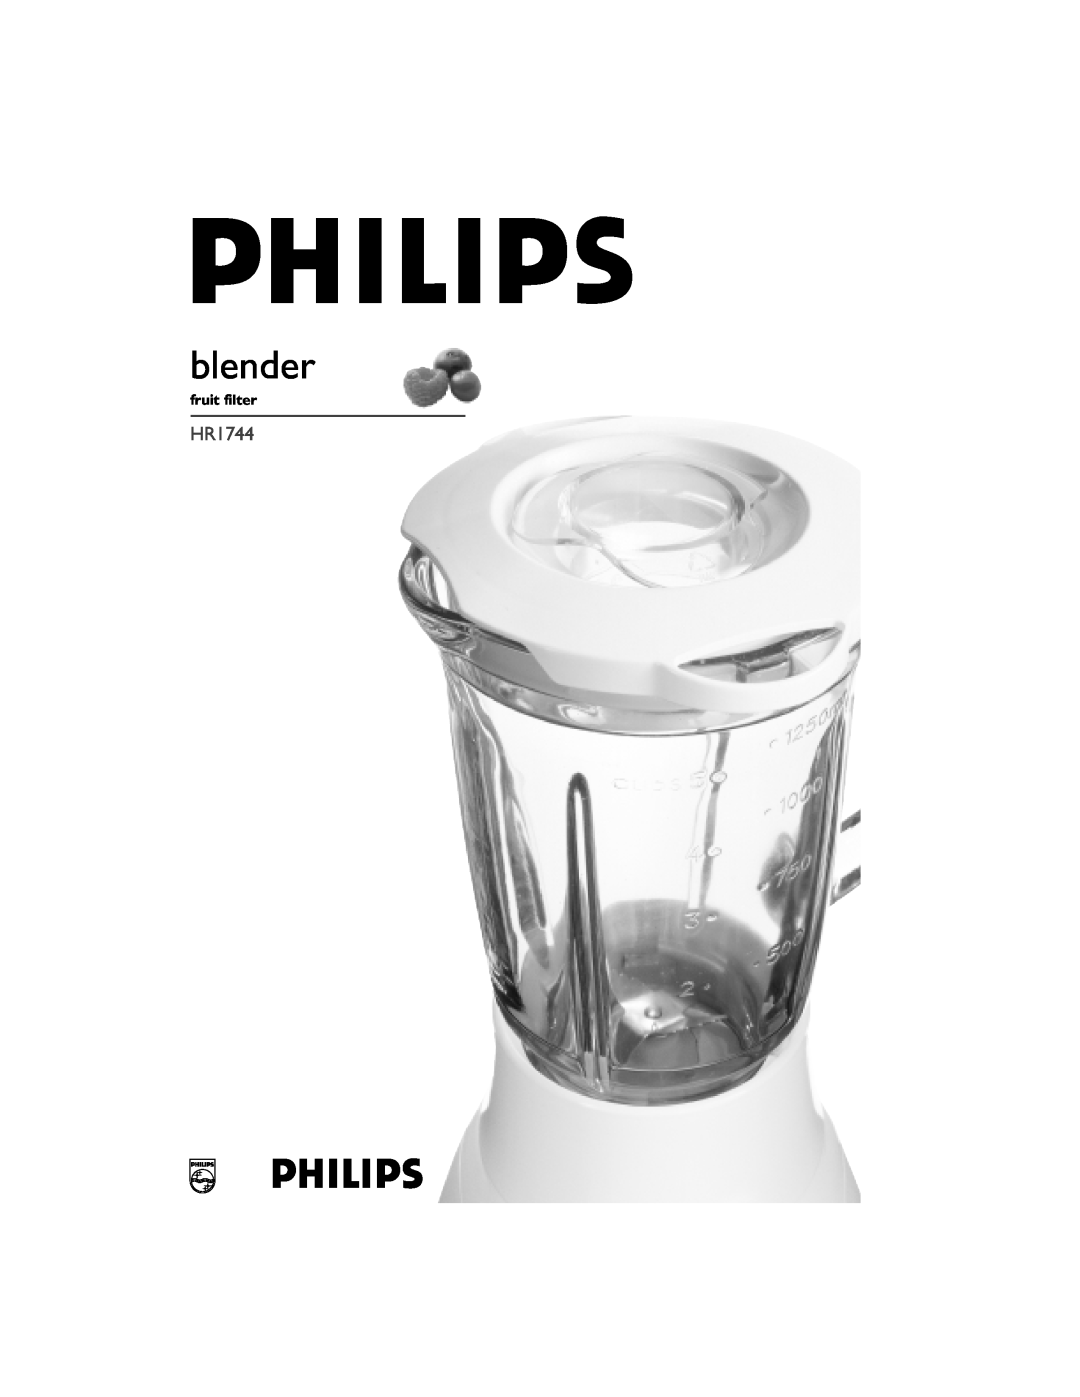 Philips HR1744 manual blender, fruit filter 